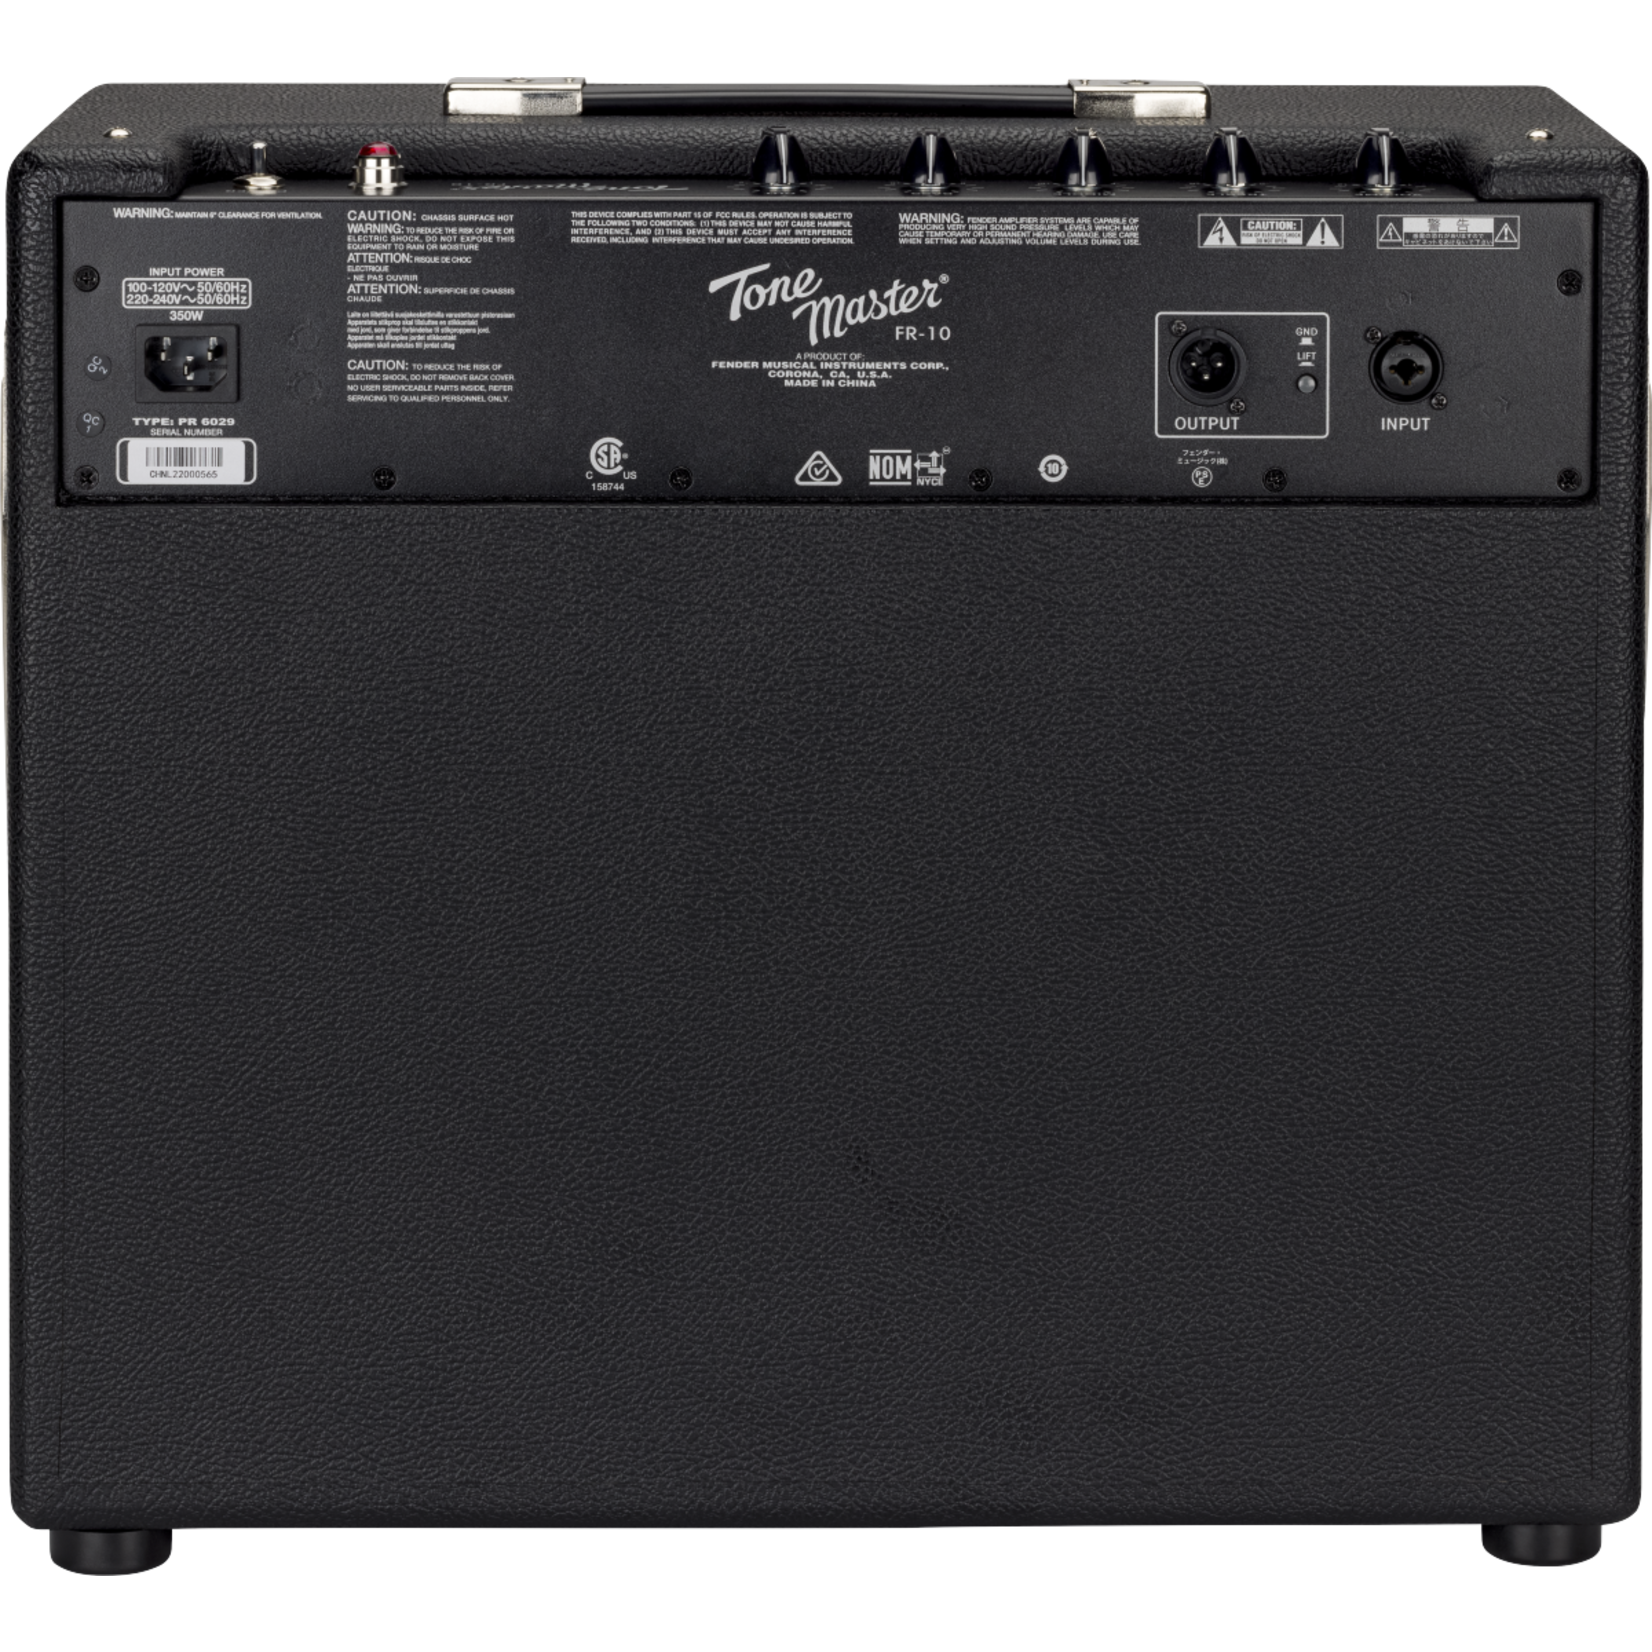 Fender Tone Master FR-10, 120V Powered Cabinet